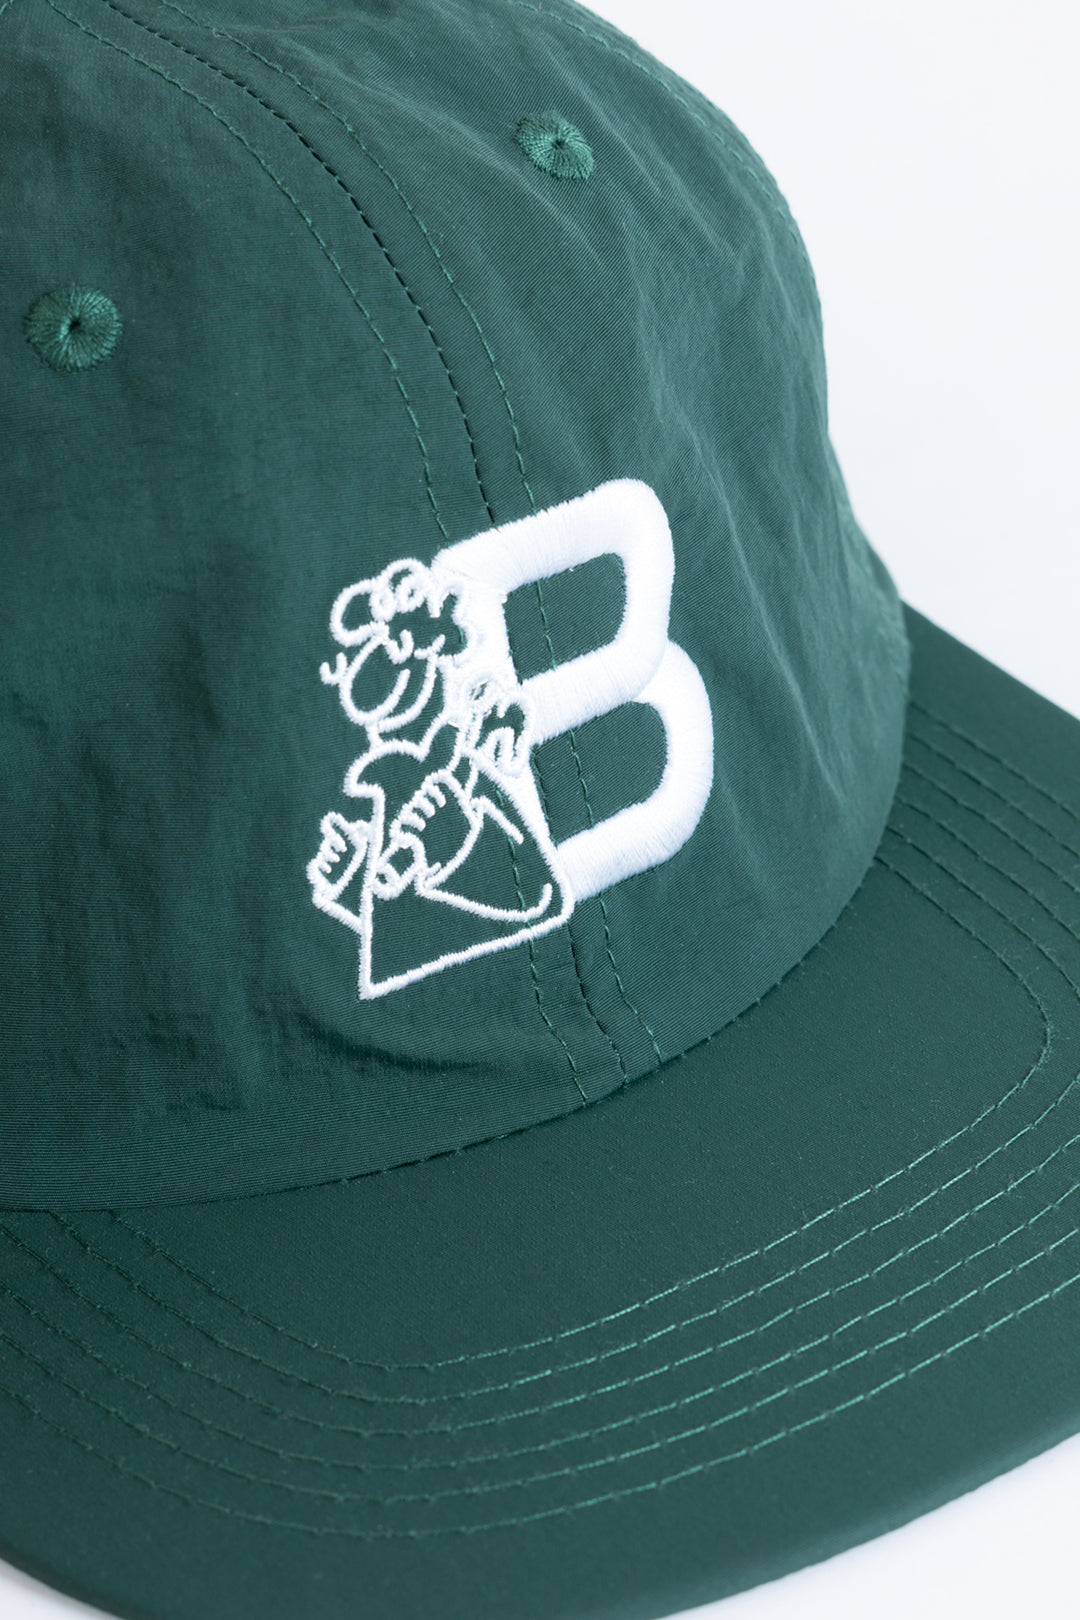 Blacksmith - Nylon Grafter Cap - Green